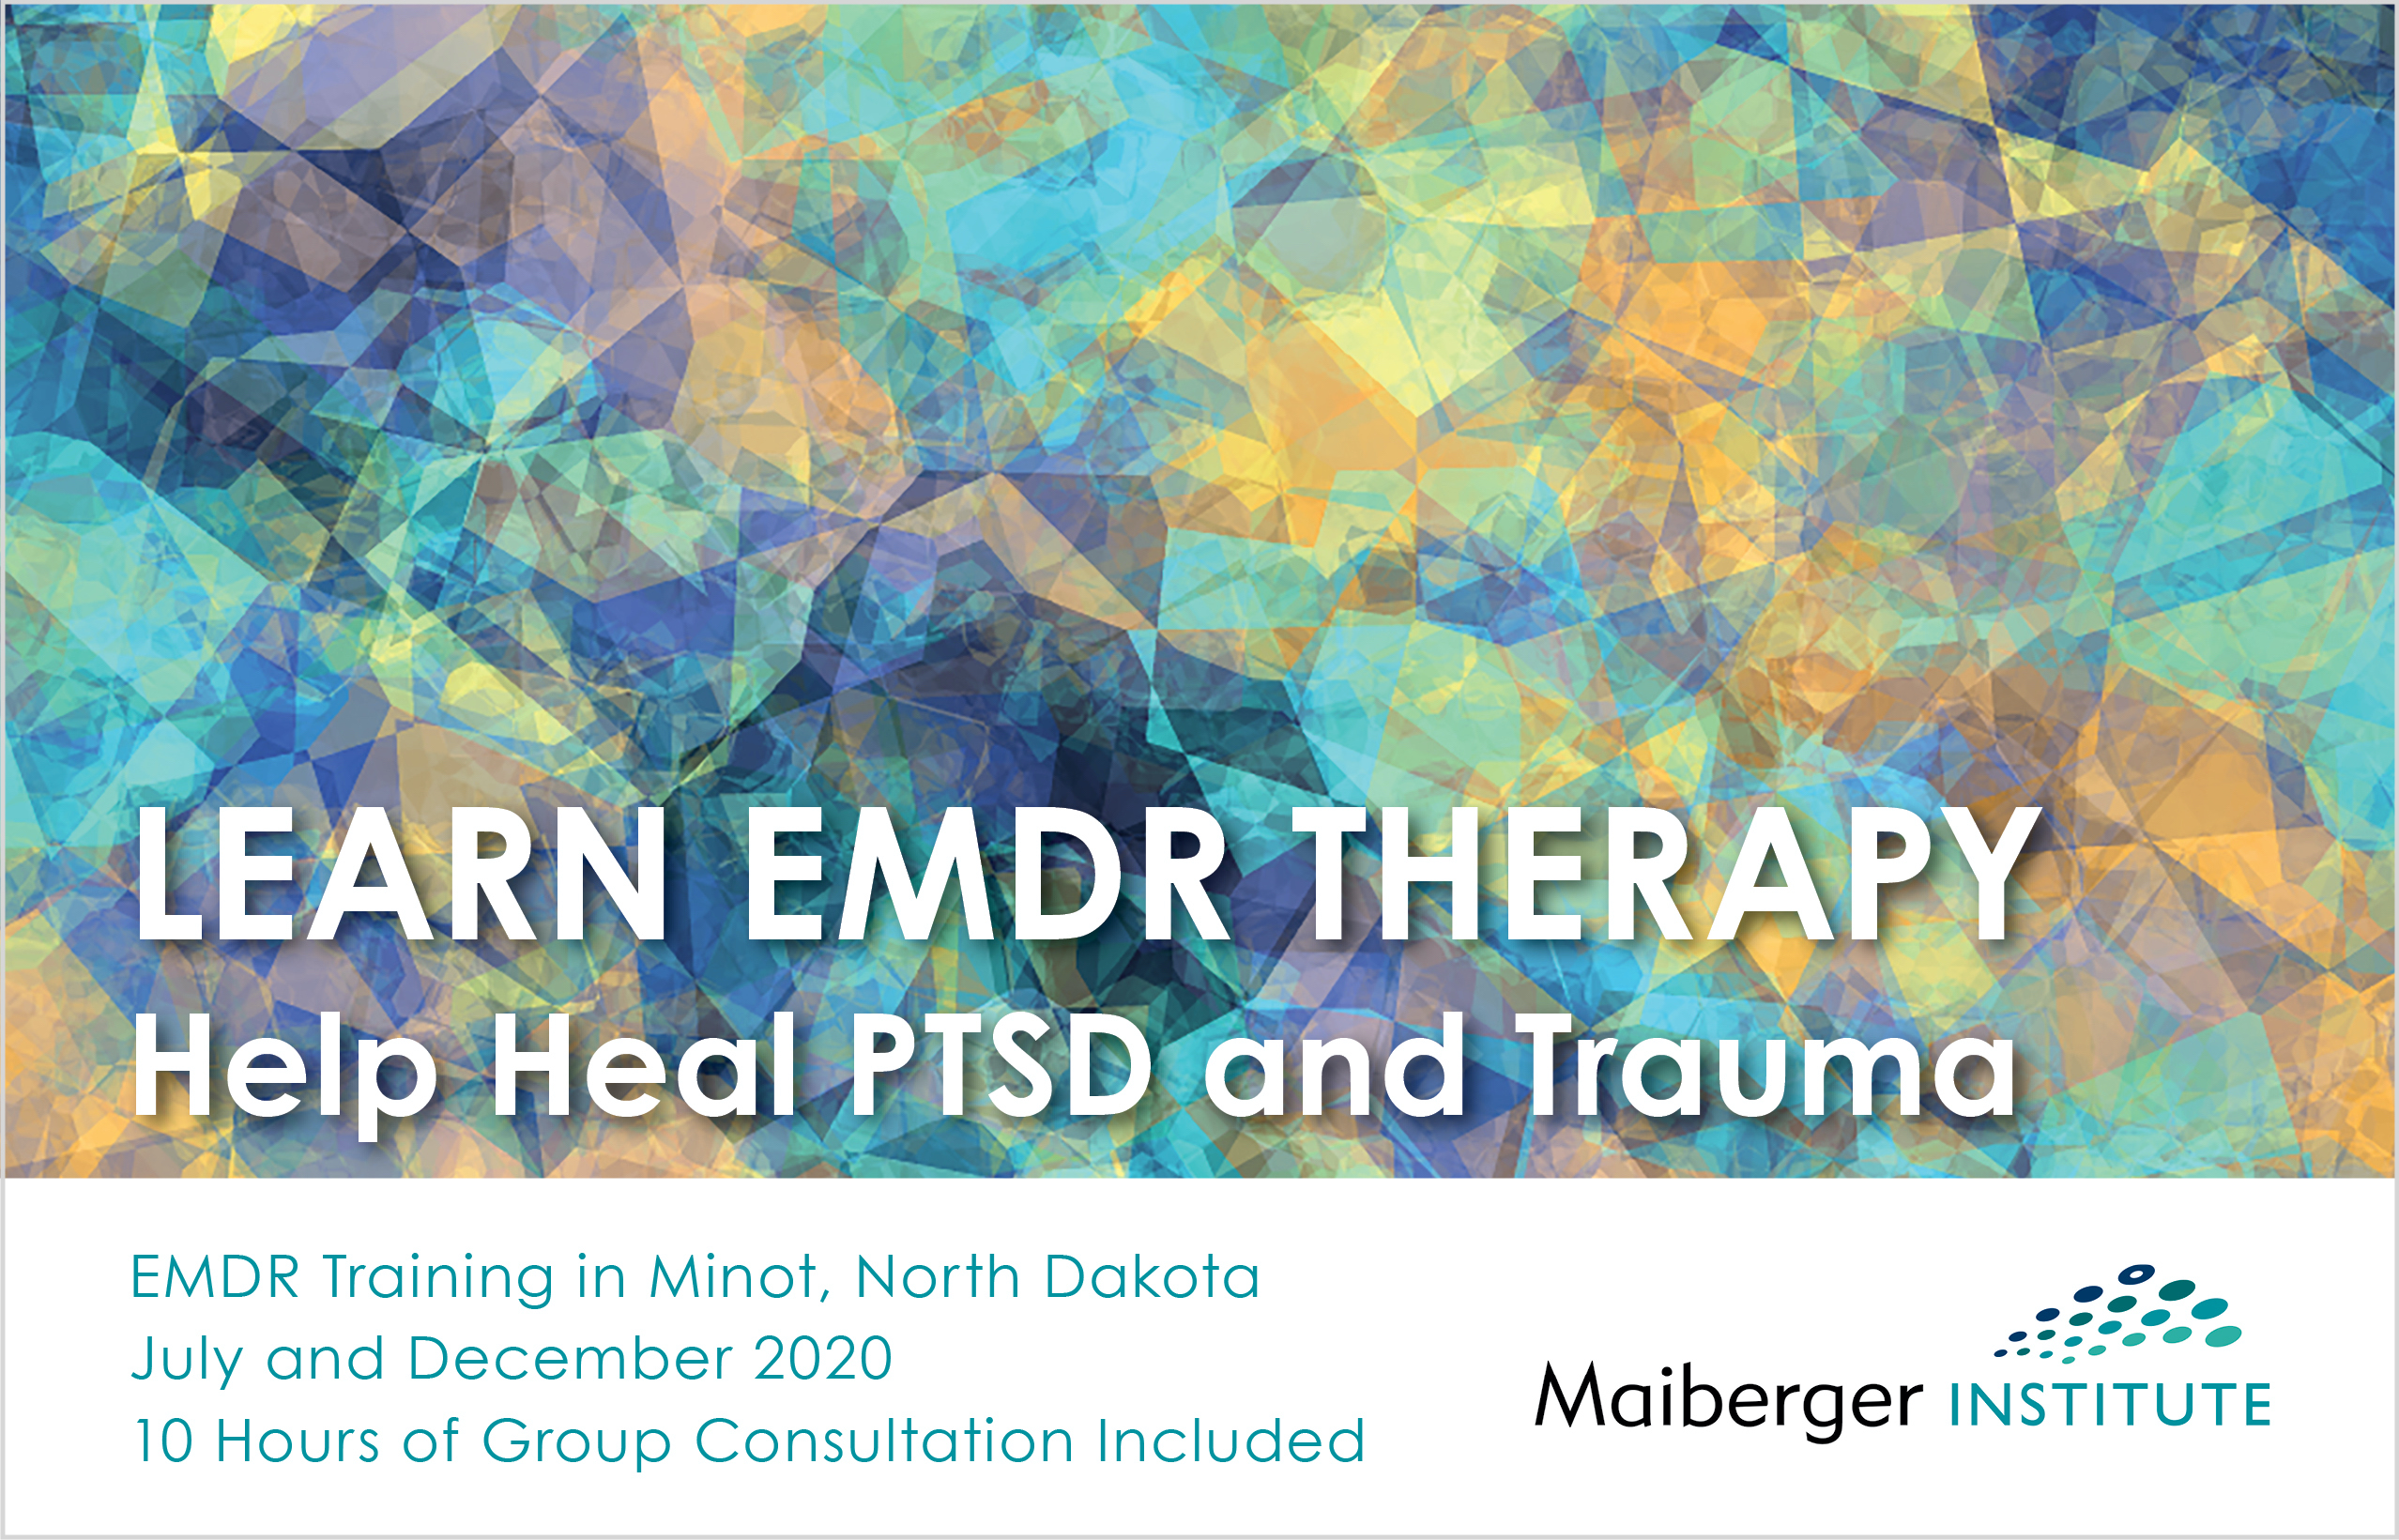 EMDR Training in Minot, North Dakota - July and December 2020 - Maiberger Institute - EMDR Events Calendar